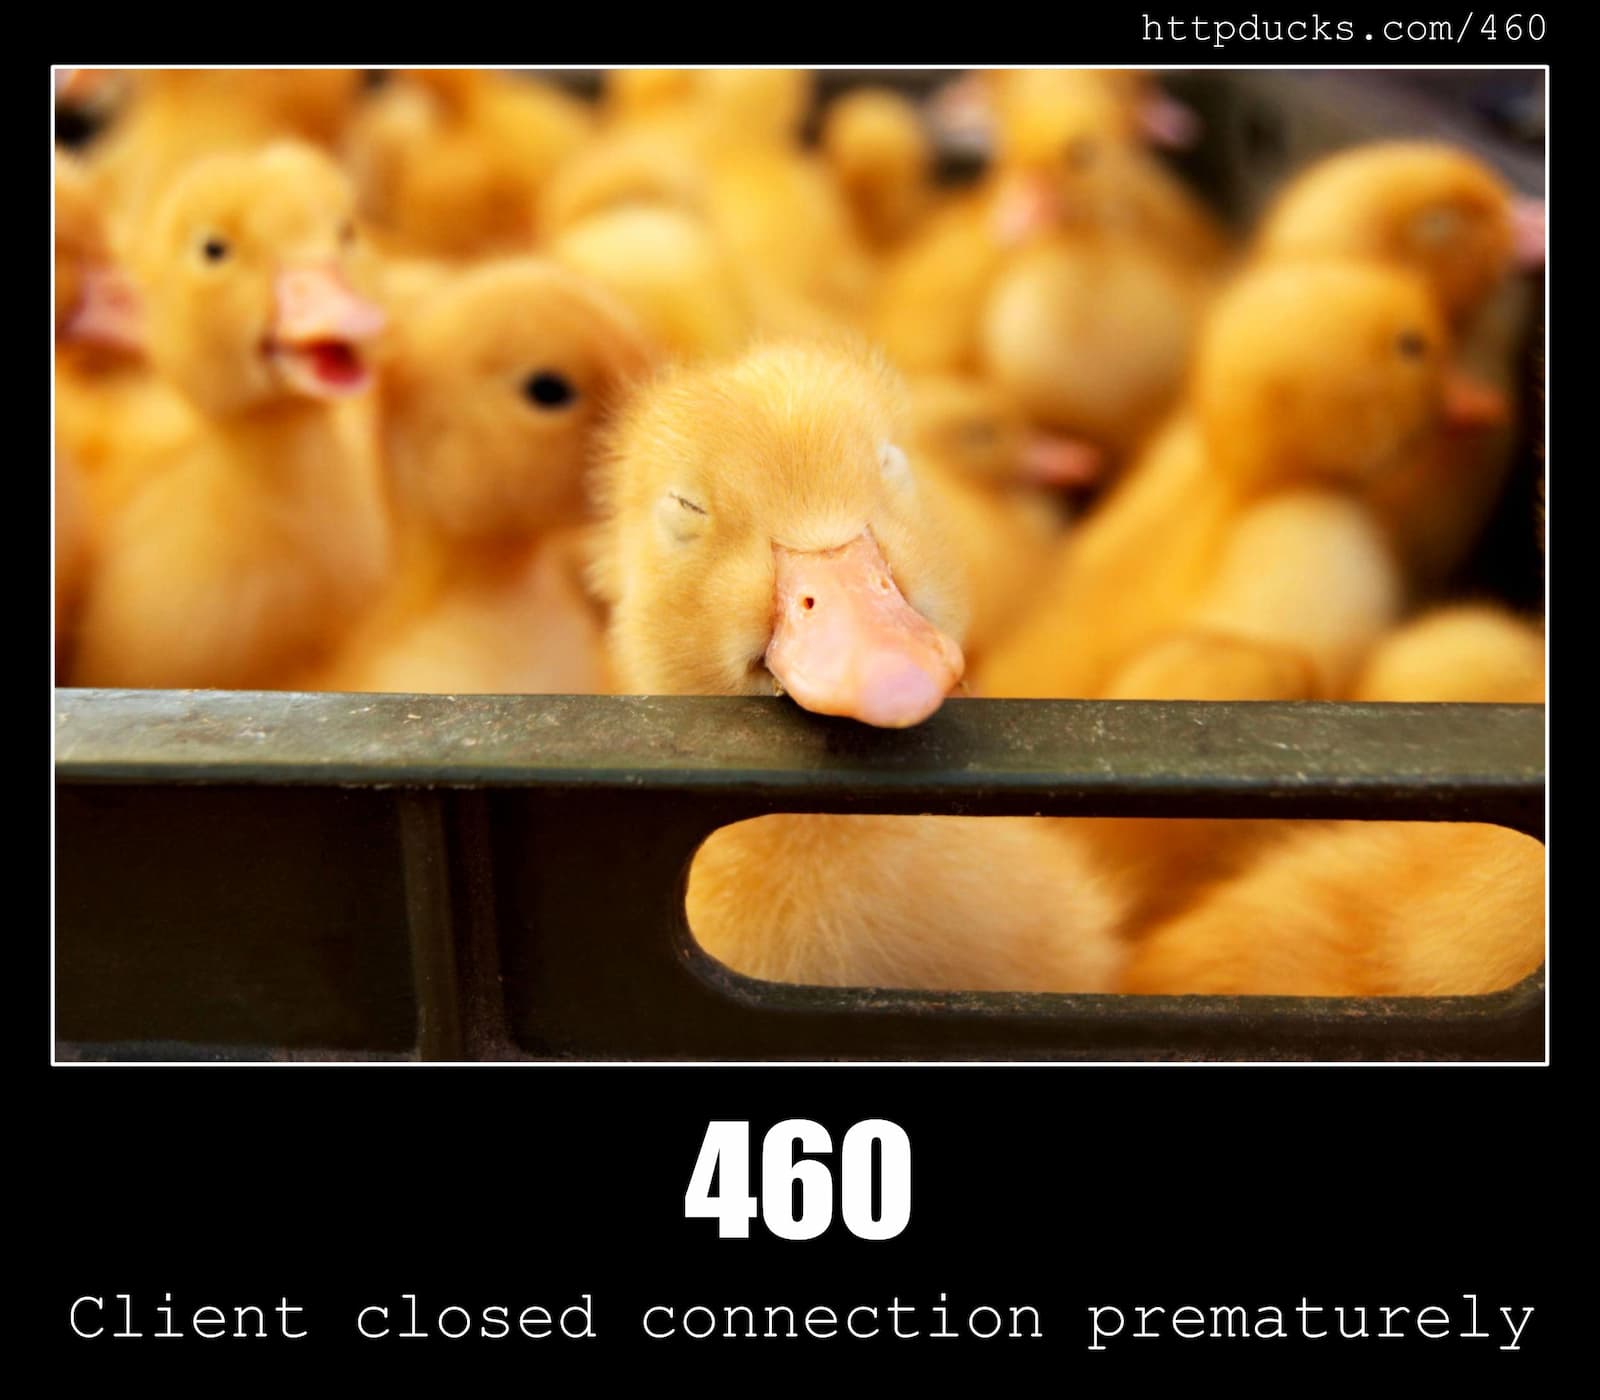 HTTP Status Code 460 Client closed connection prematurely & Ducks